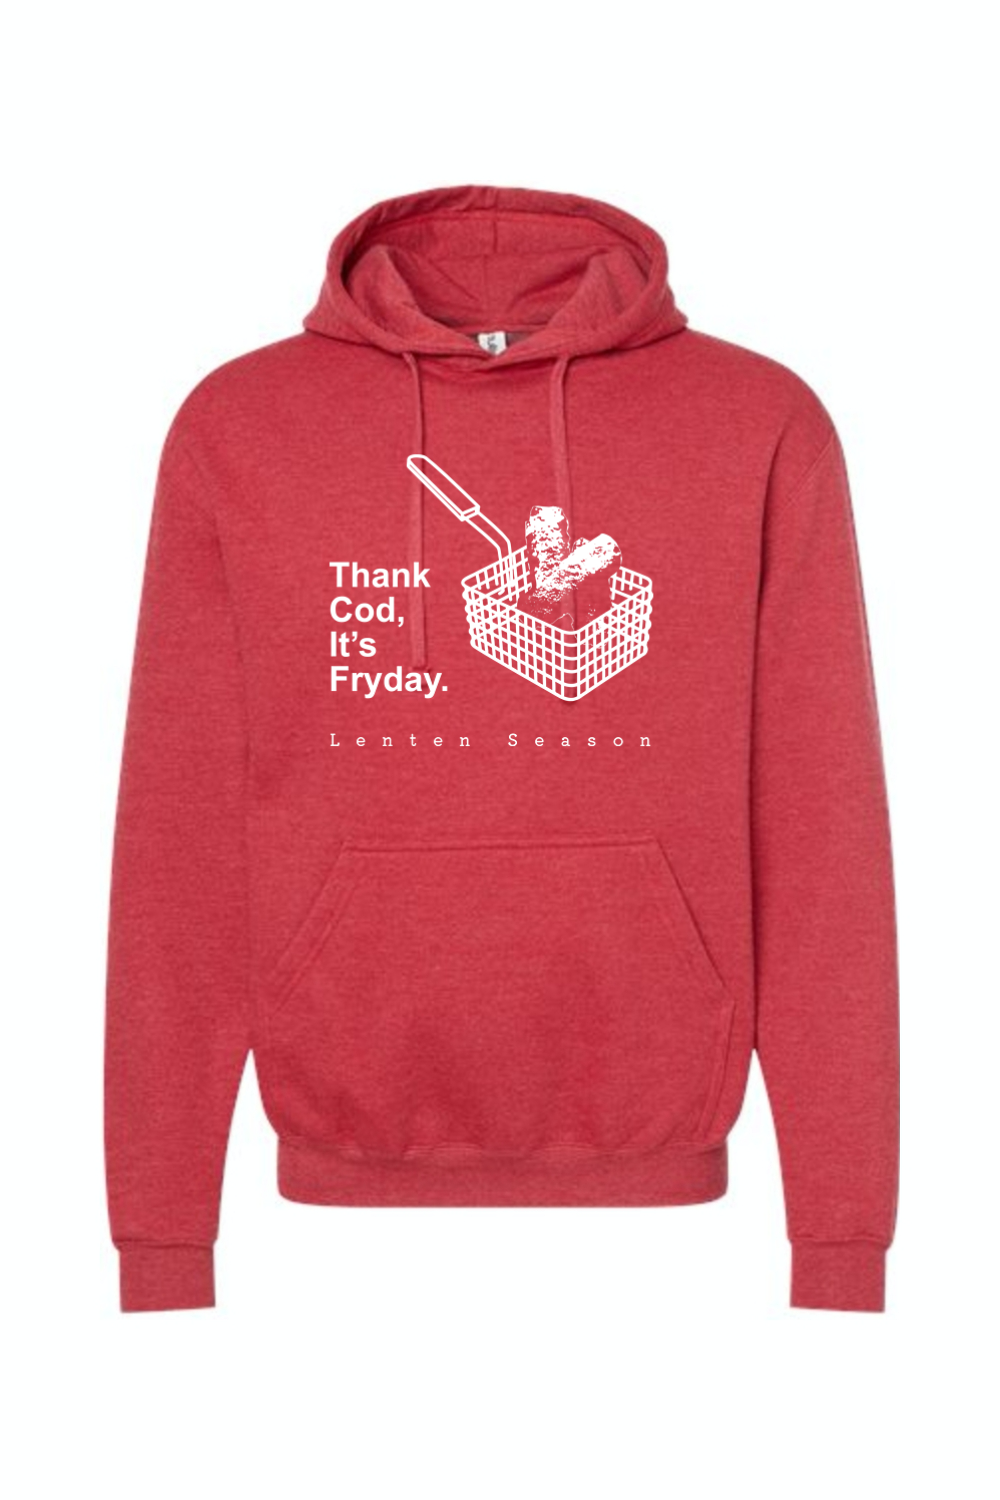 TCIF - Thank Cod, Its Fryday Fish Fry Hoodie Sweatshirt